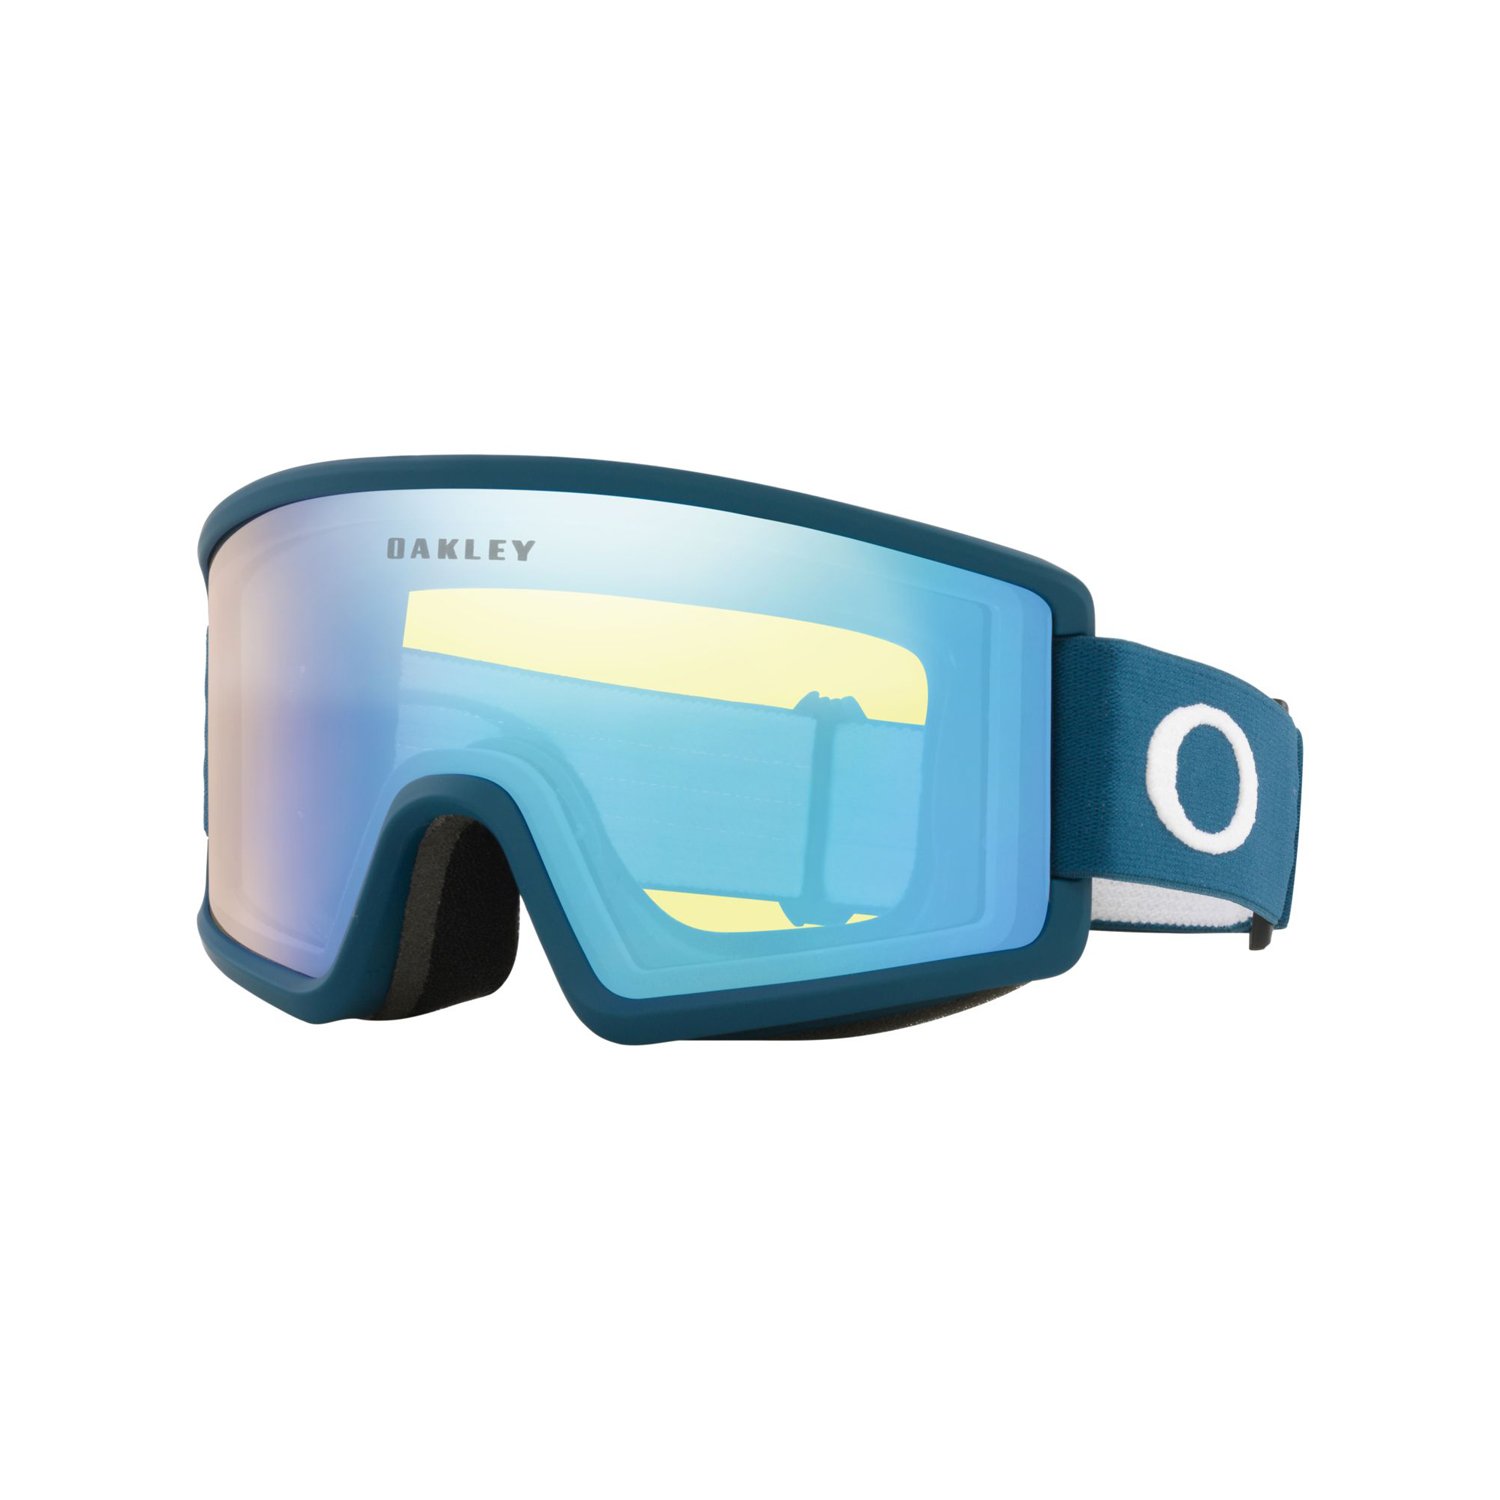 Oakley Target Line L Kayak/Snowboard Goggle - MAVİ - 1